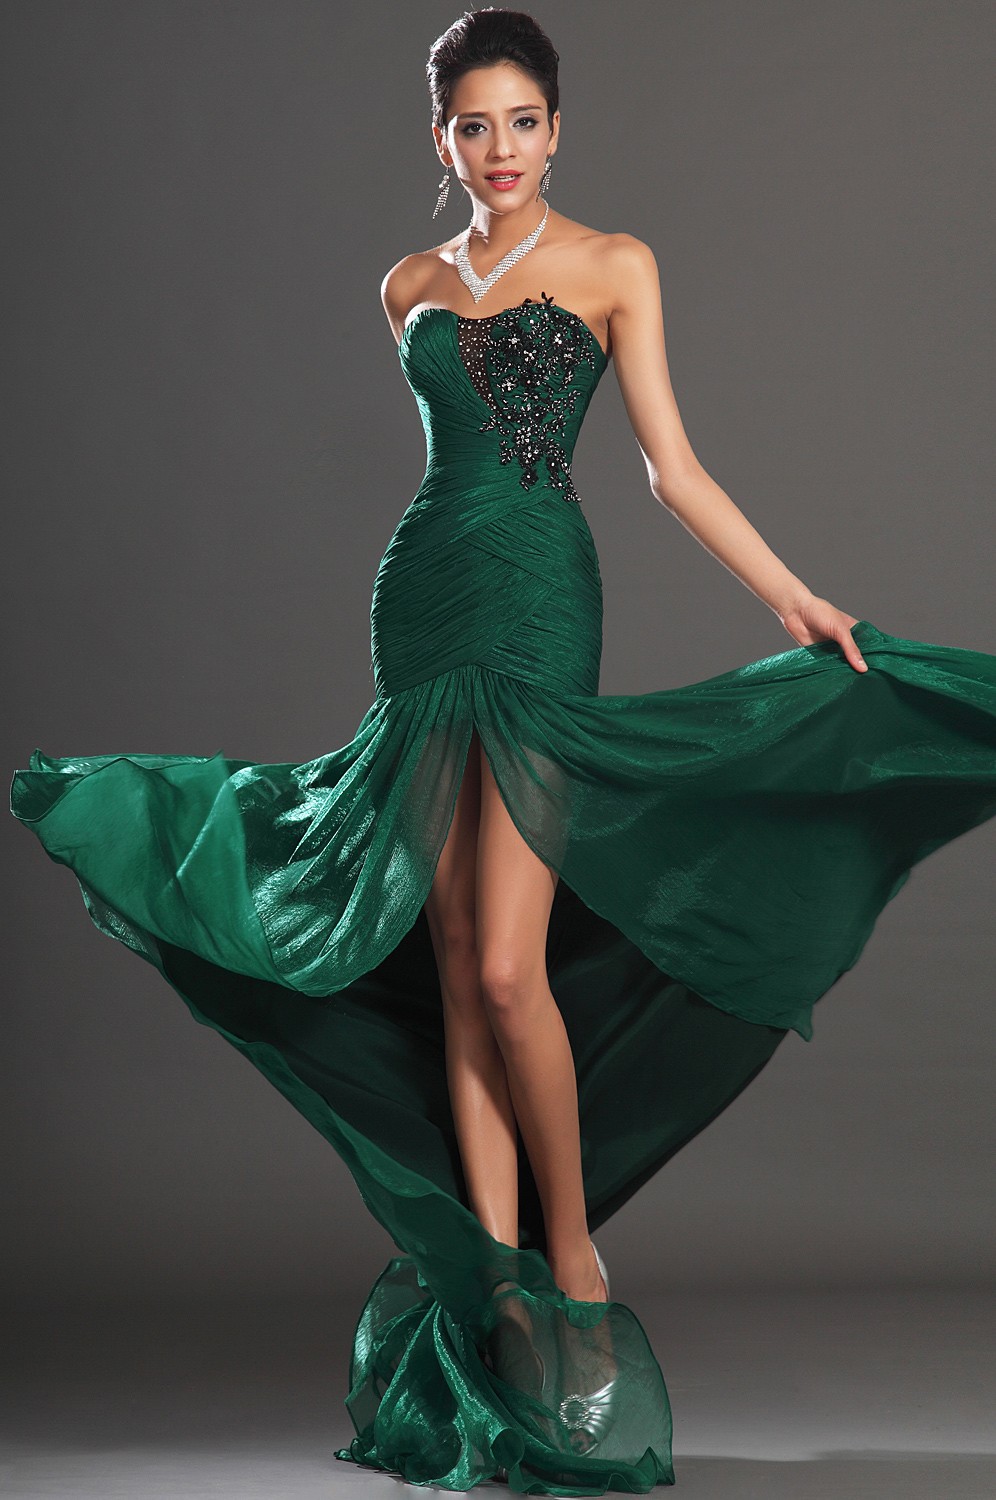 Green Prom Dresses | DressedUpGirl.com